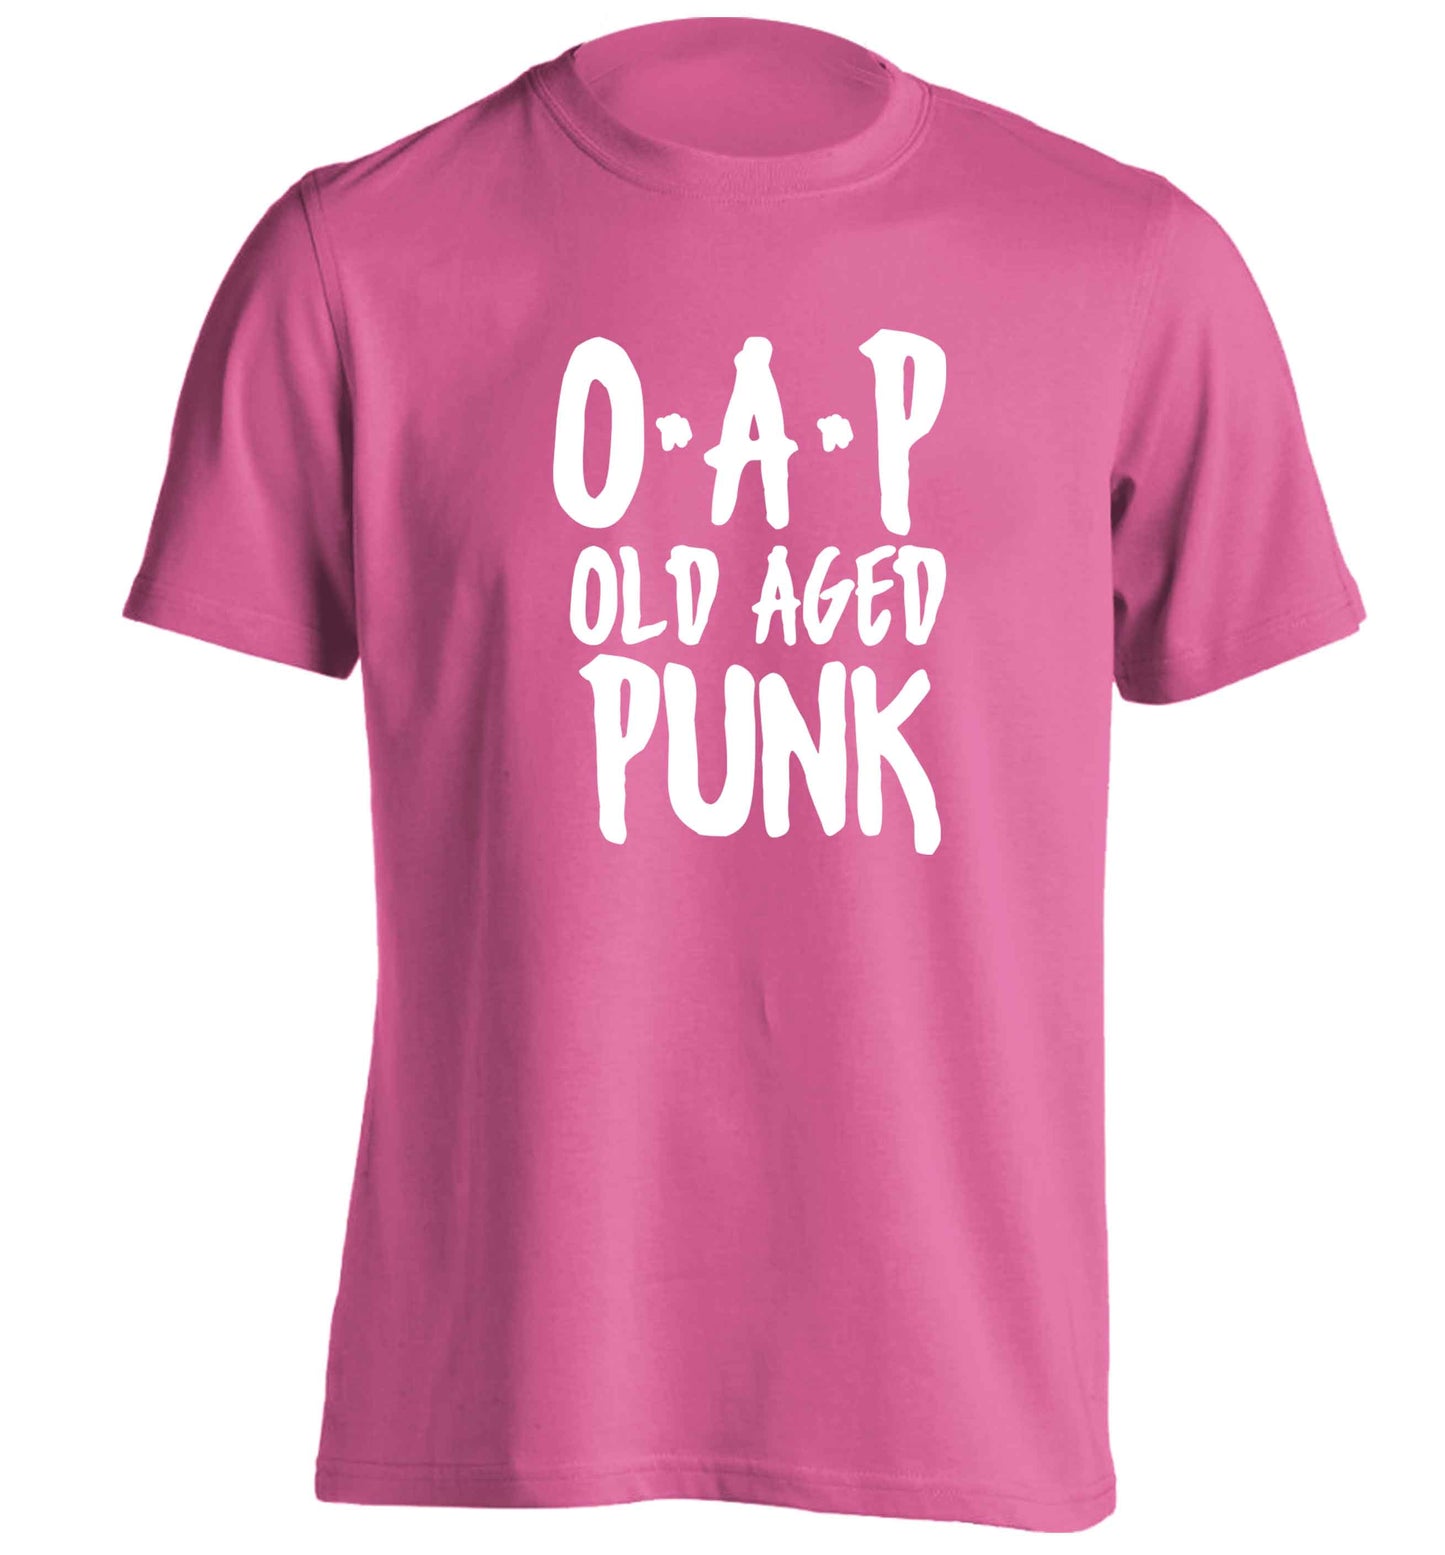 O.A.P Old Age Punk adults unisex pink Tshirt 2XL